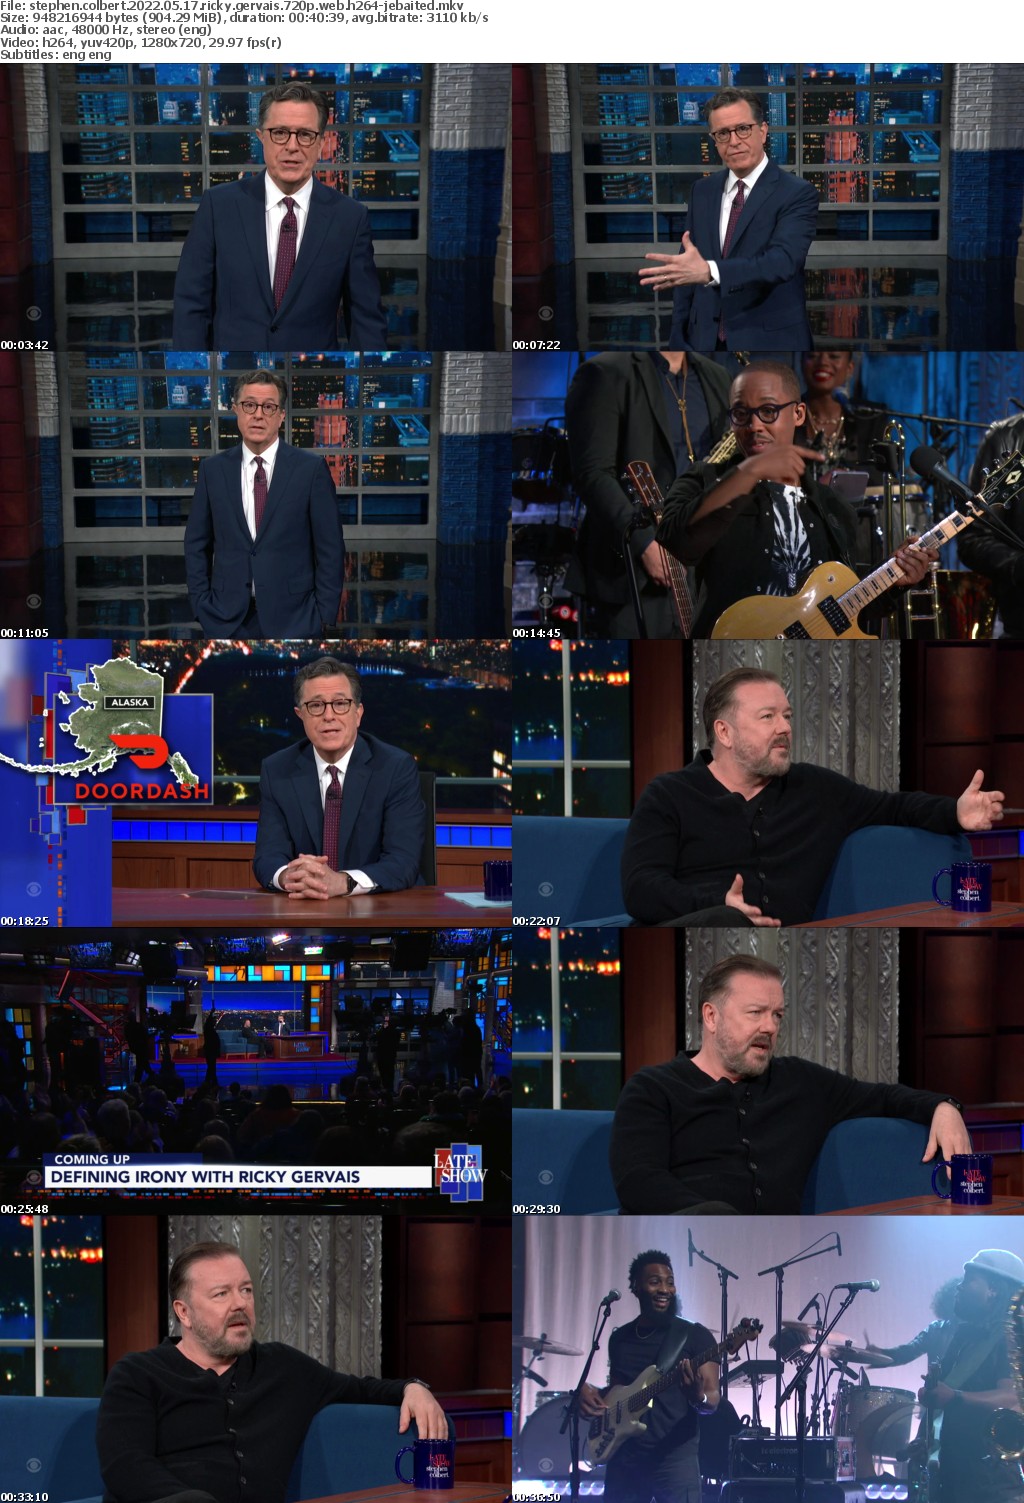 Stephen Colbert 2022 05 17 Ricky Gervais 720p WEB H264-JEBAITED